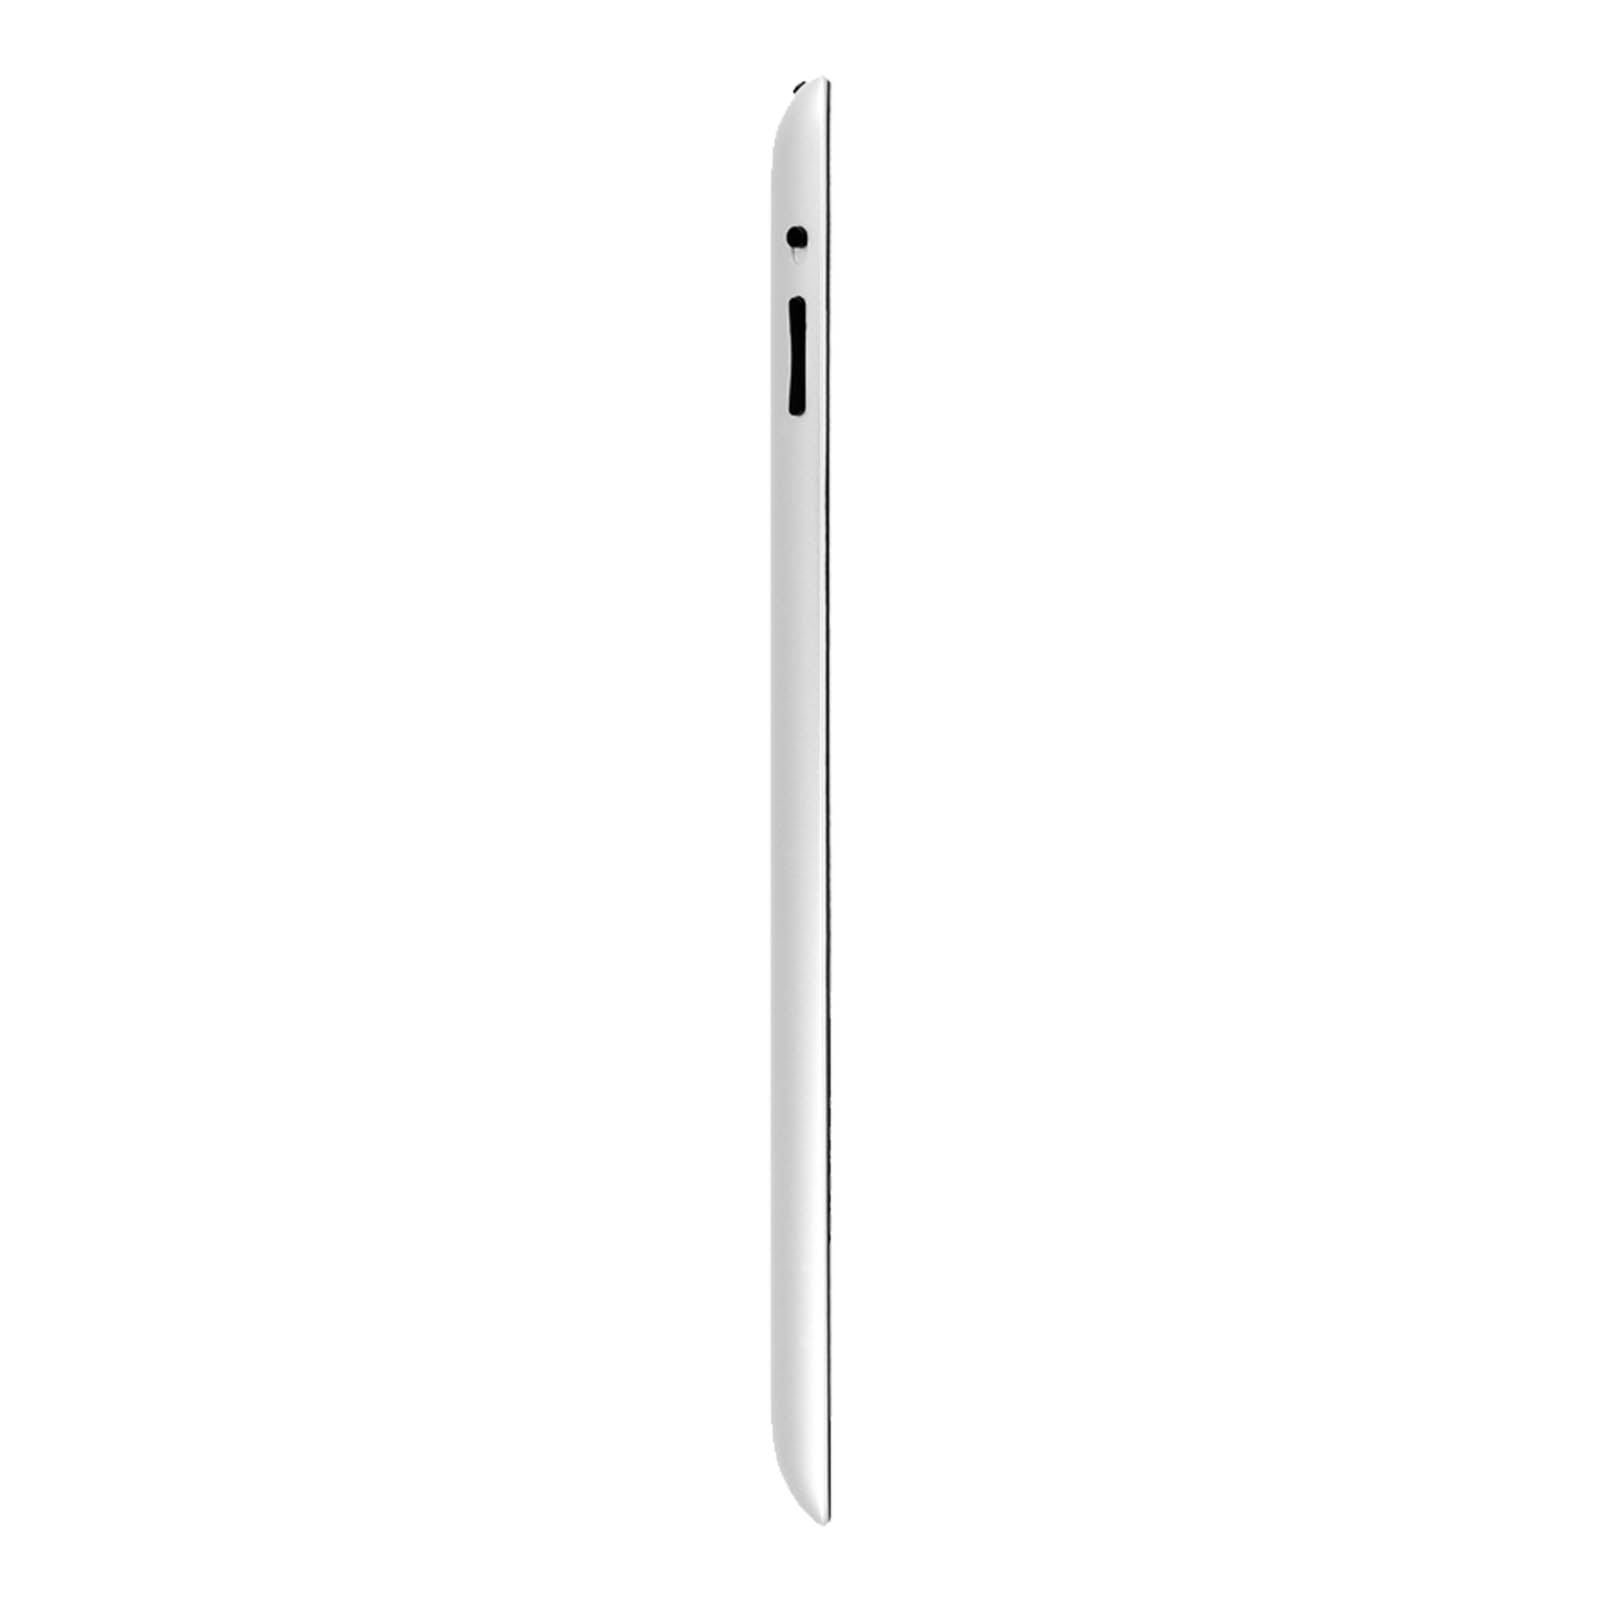 Apple iPad 4 16GB Bianco WiFi & Cellulare Come Nuovo